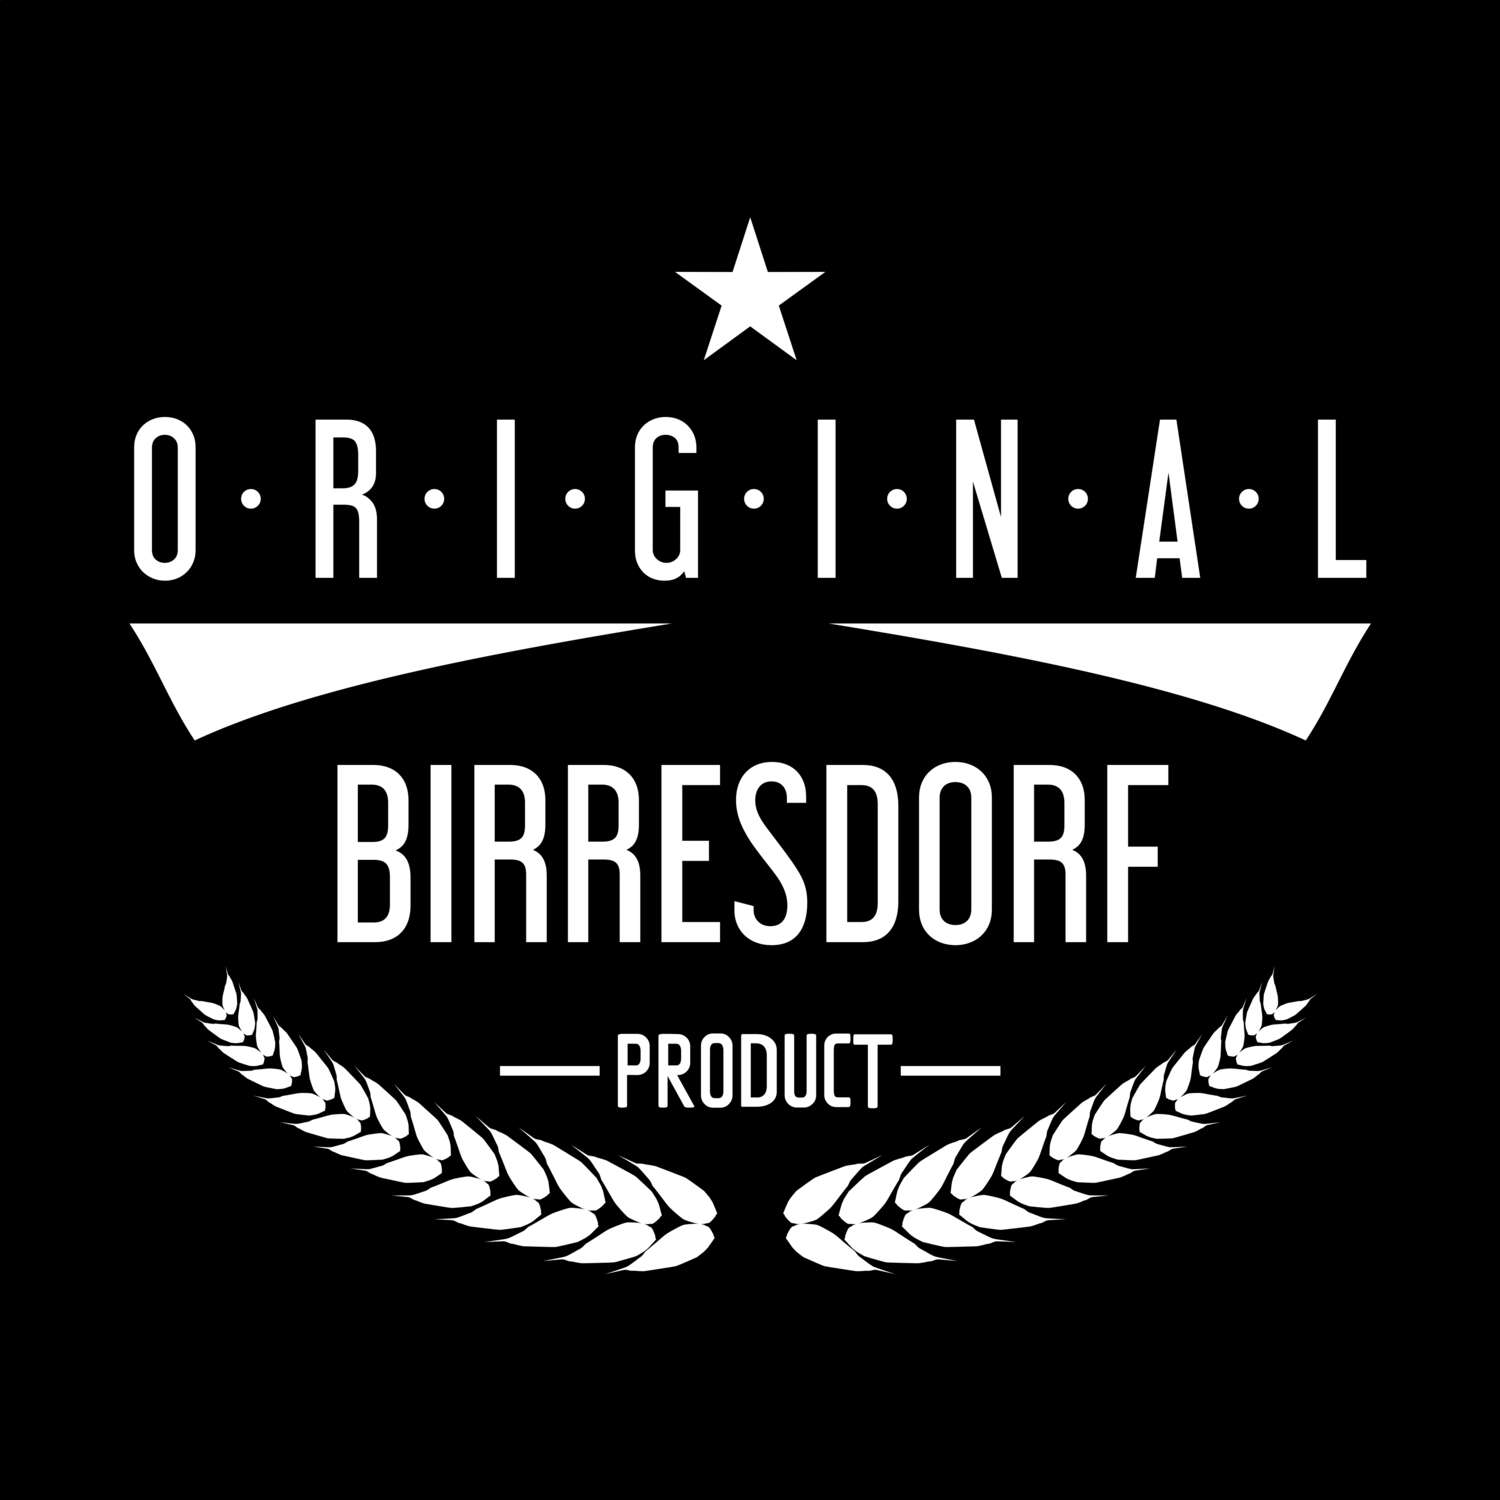 Birresdorf T-Shirt »Original Product«